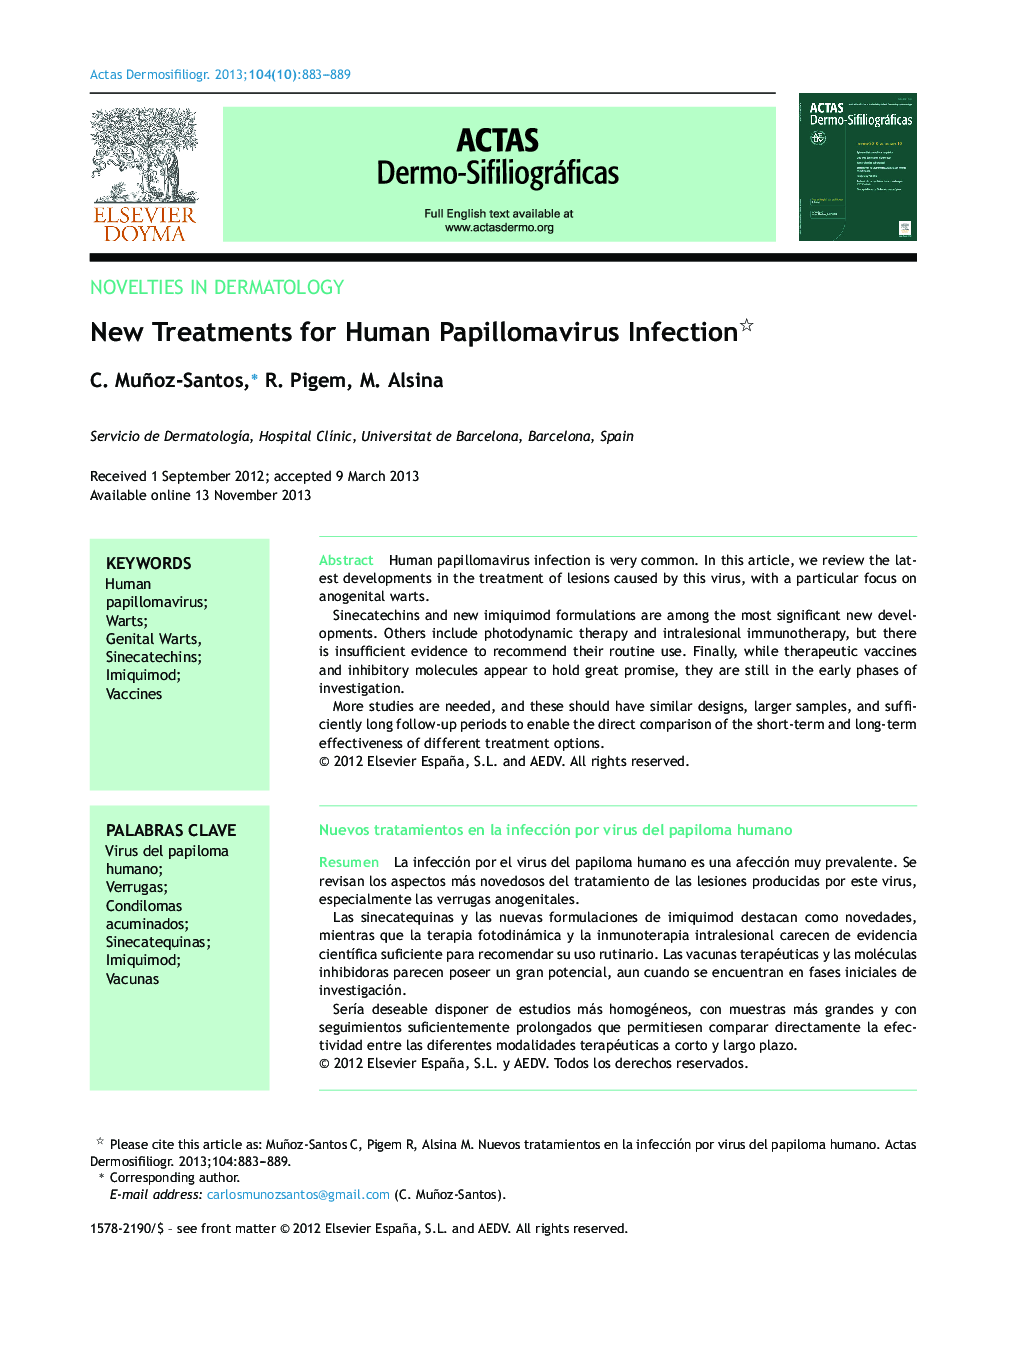 New Treatments for Human Papillomavirus Infection 